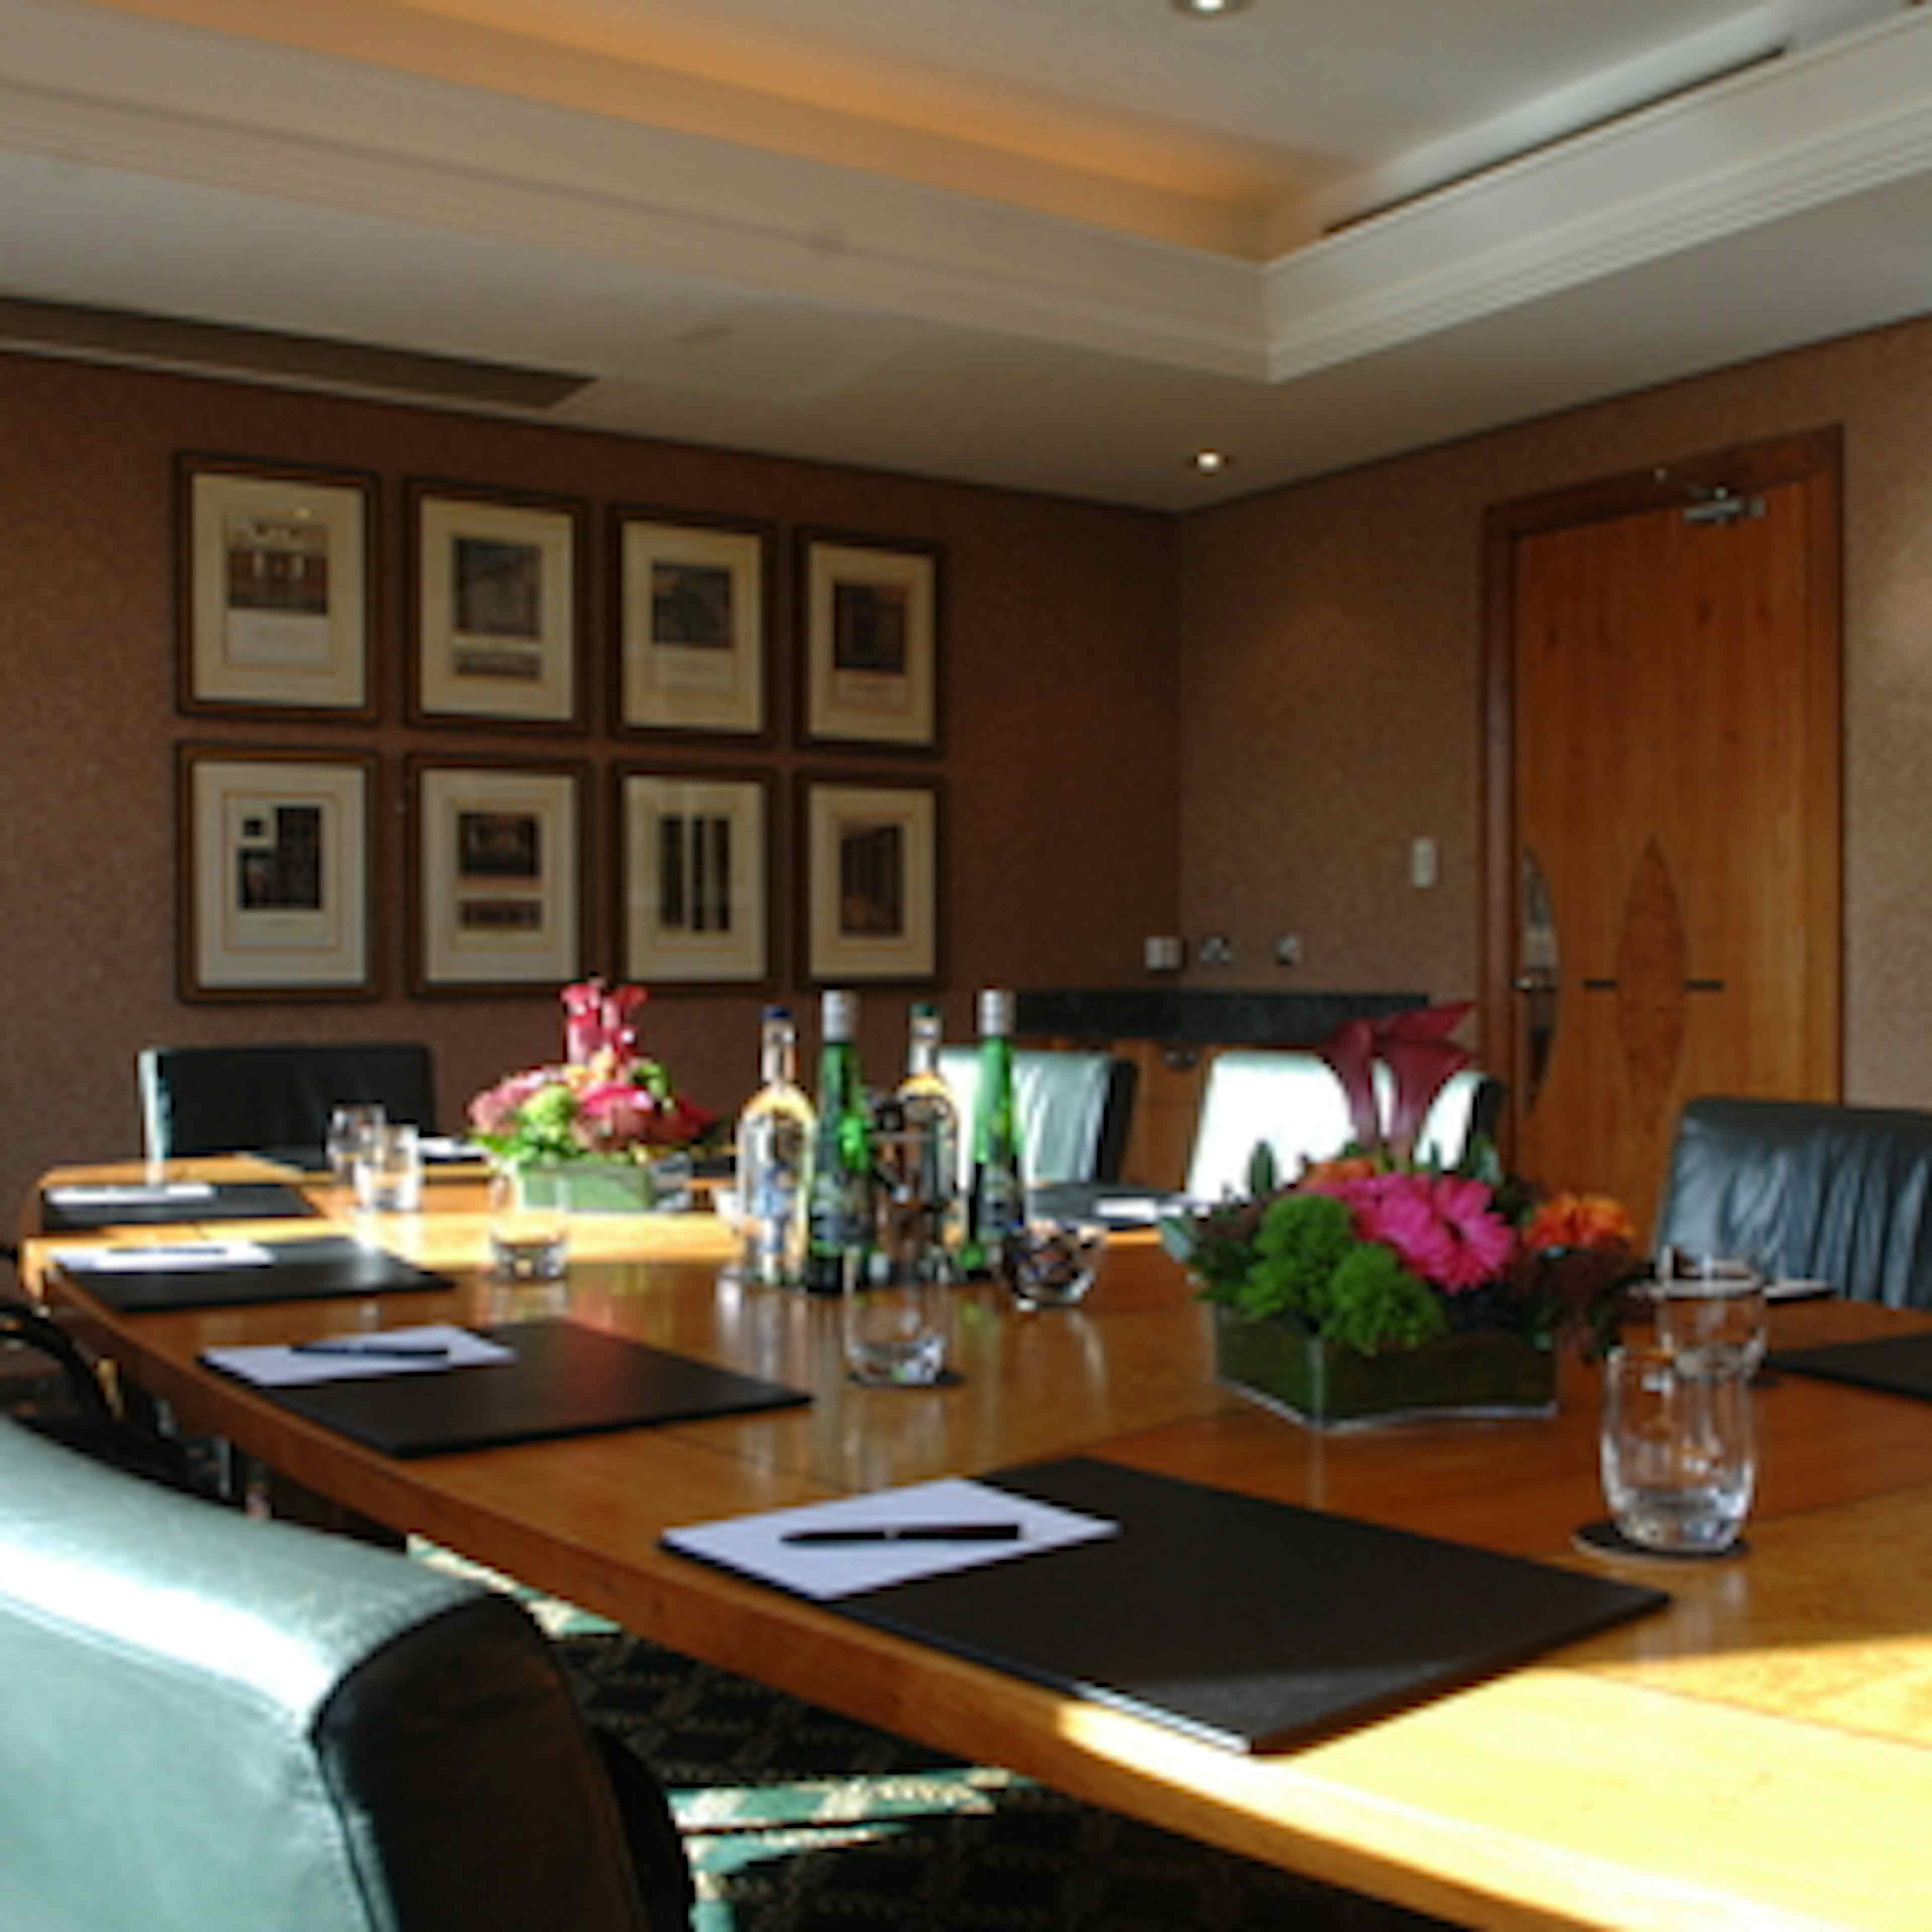 Thistle Kensington Gardens - Boardroom Meeting Room image 2